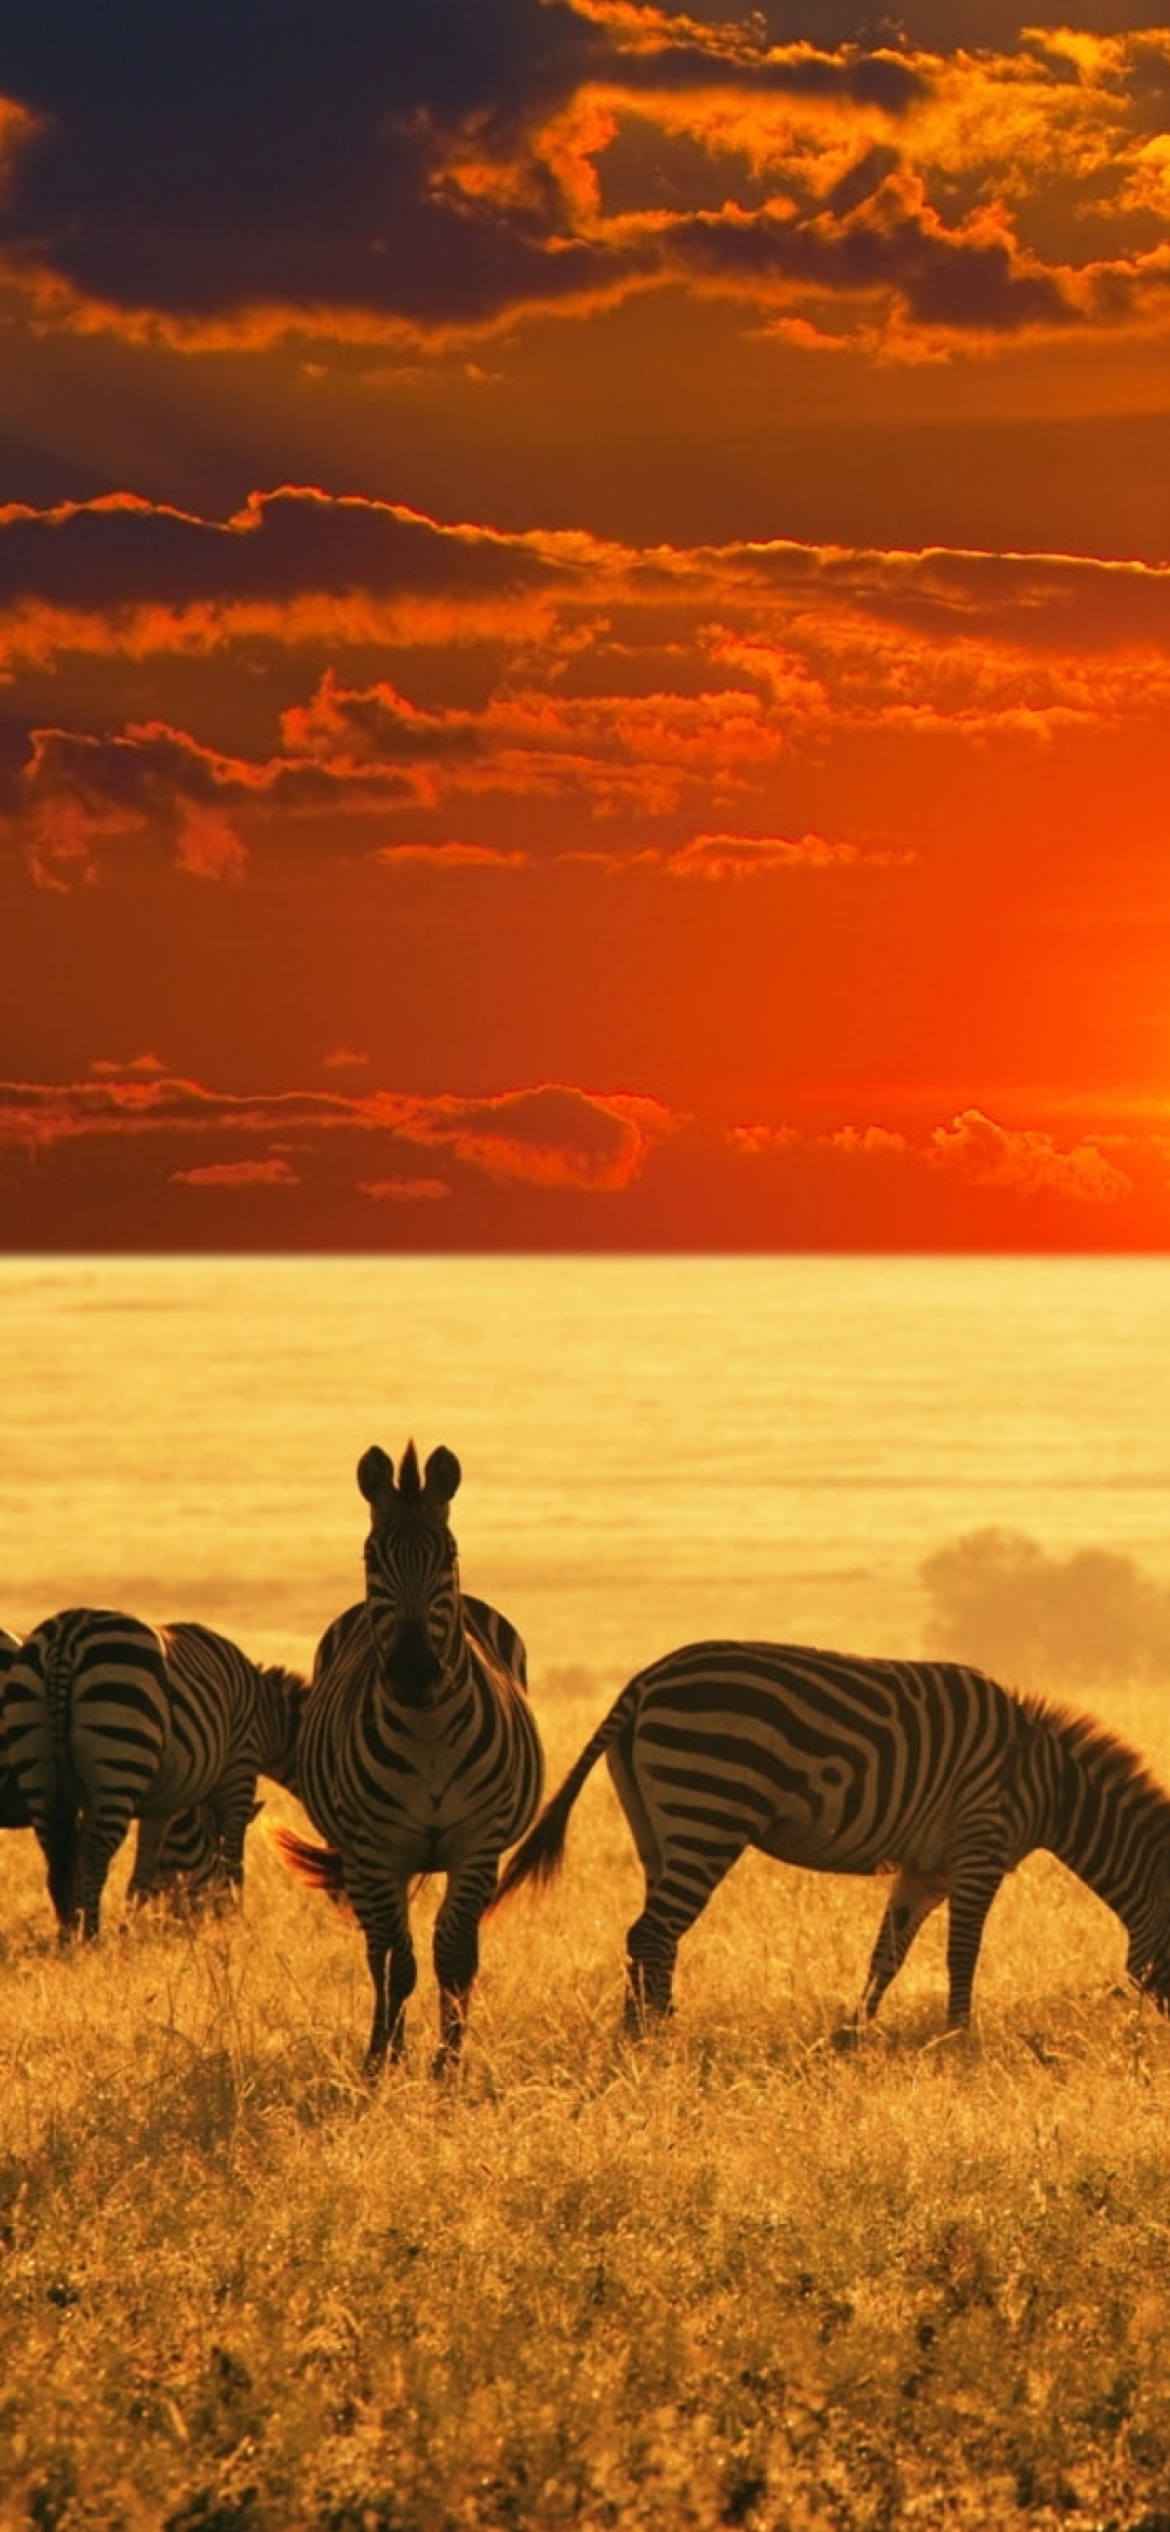 Обои Zebras At Sunset In Savannah Africa 1170x2532